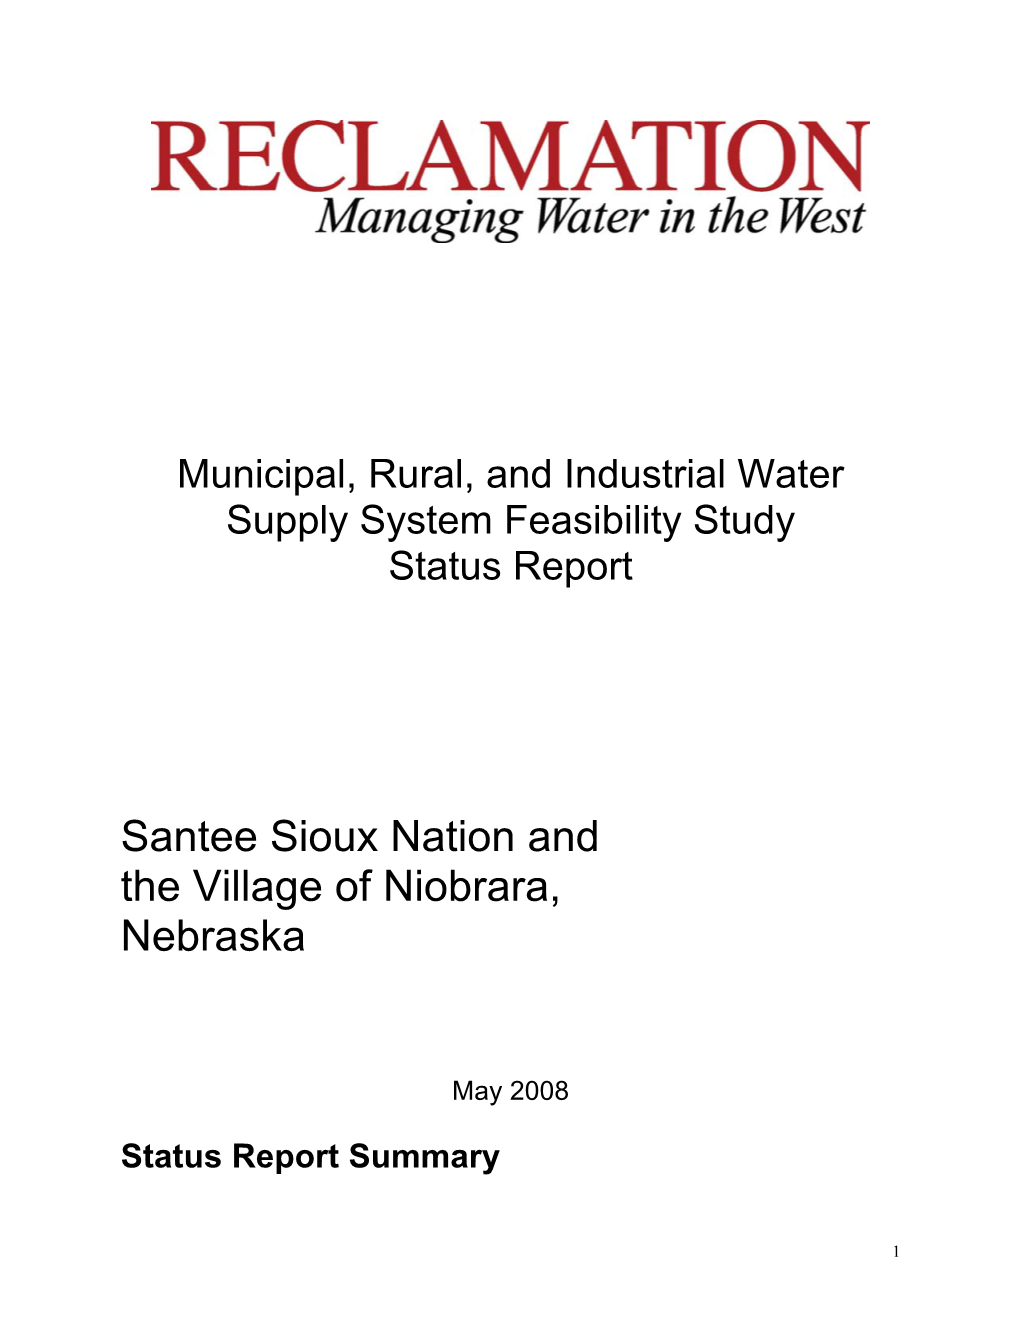 Santee Sioux Nation and the Village of Niobrara, Nebraska